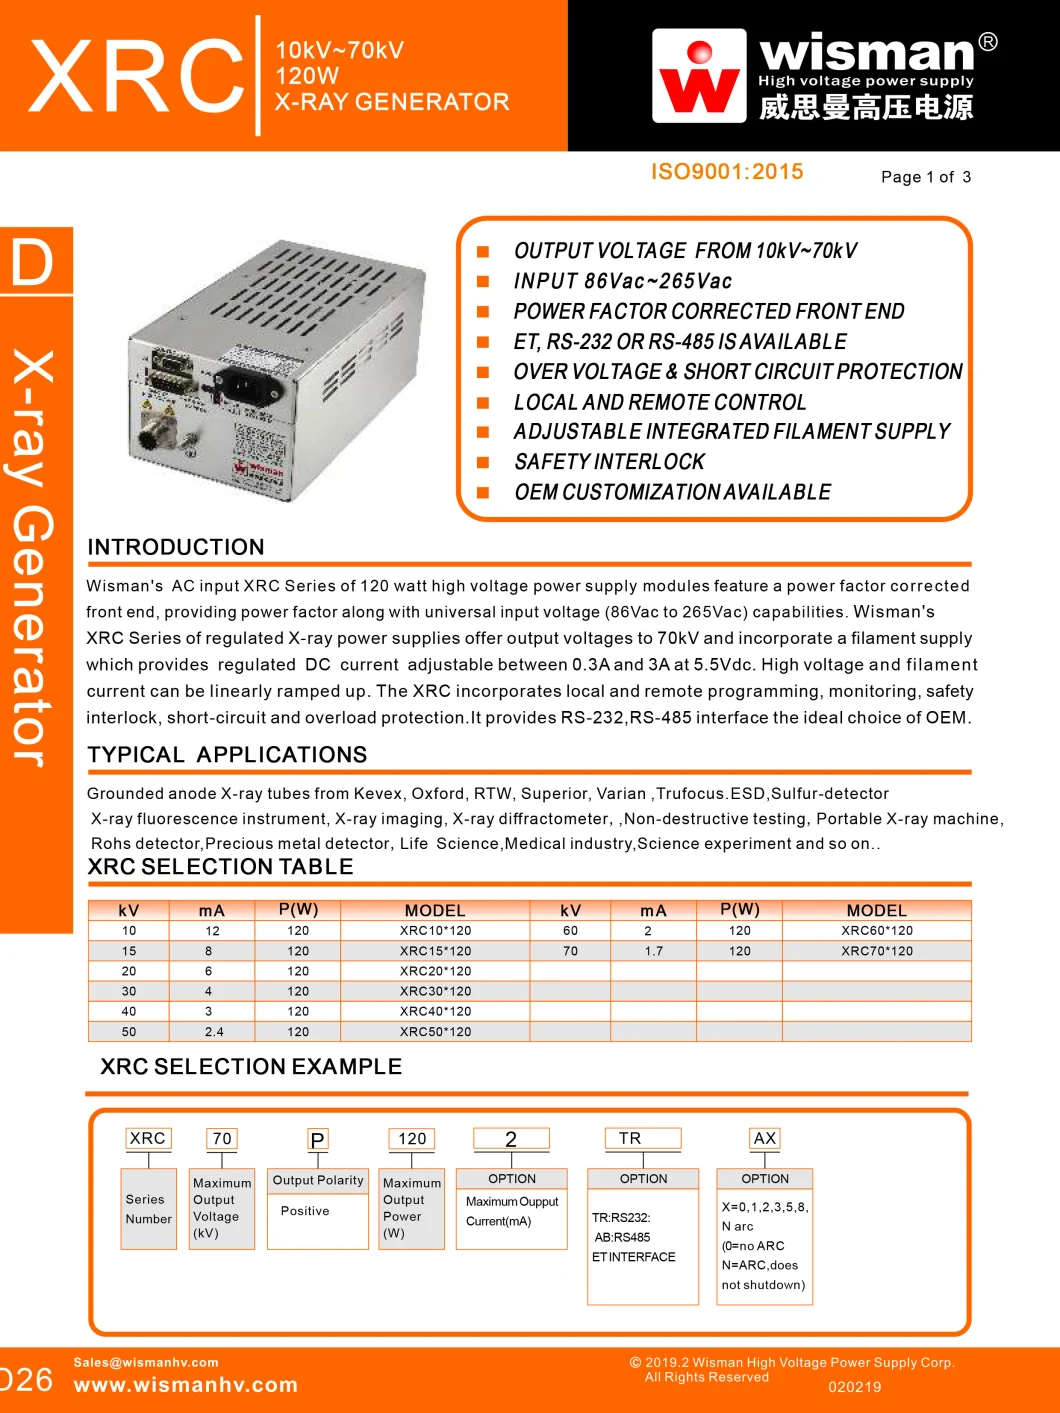 XRC Series X-ray Generator For X-ray Diffractometer (10kV-70kV, 120W)